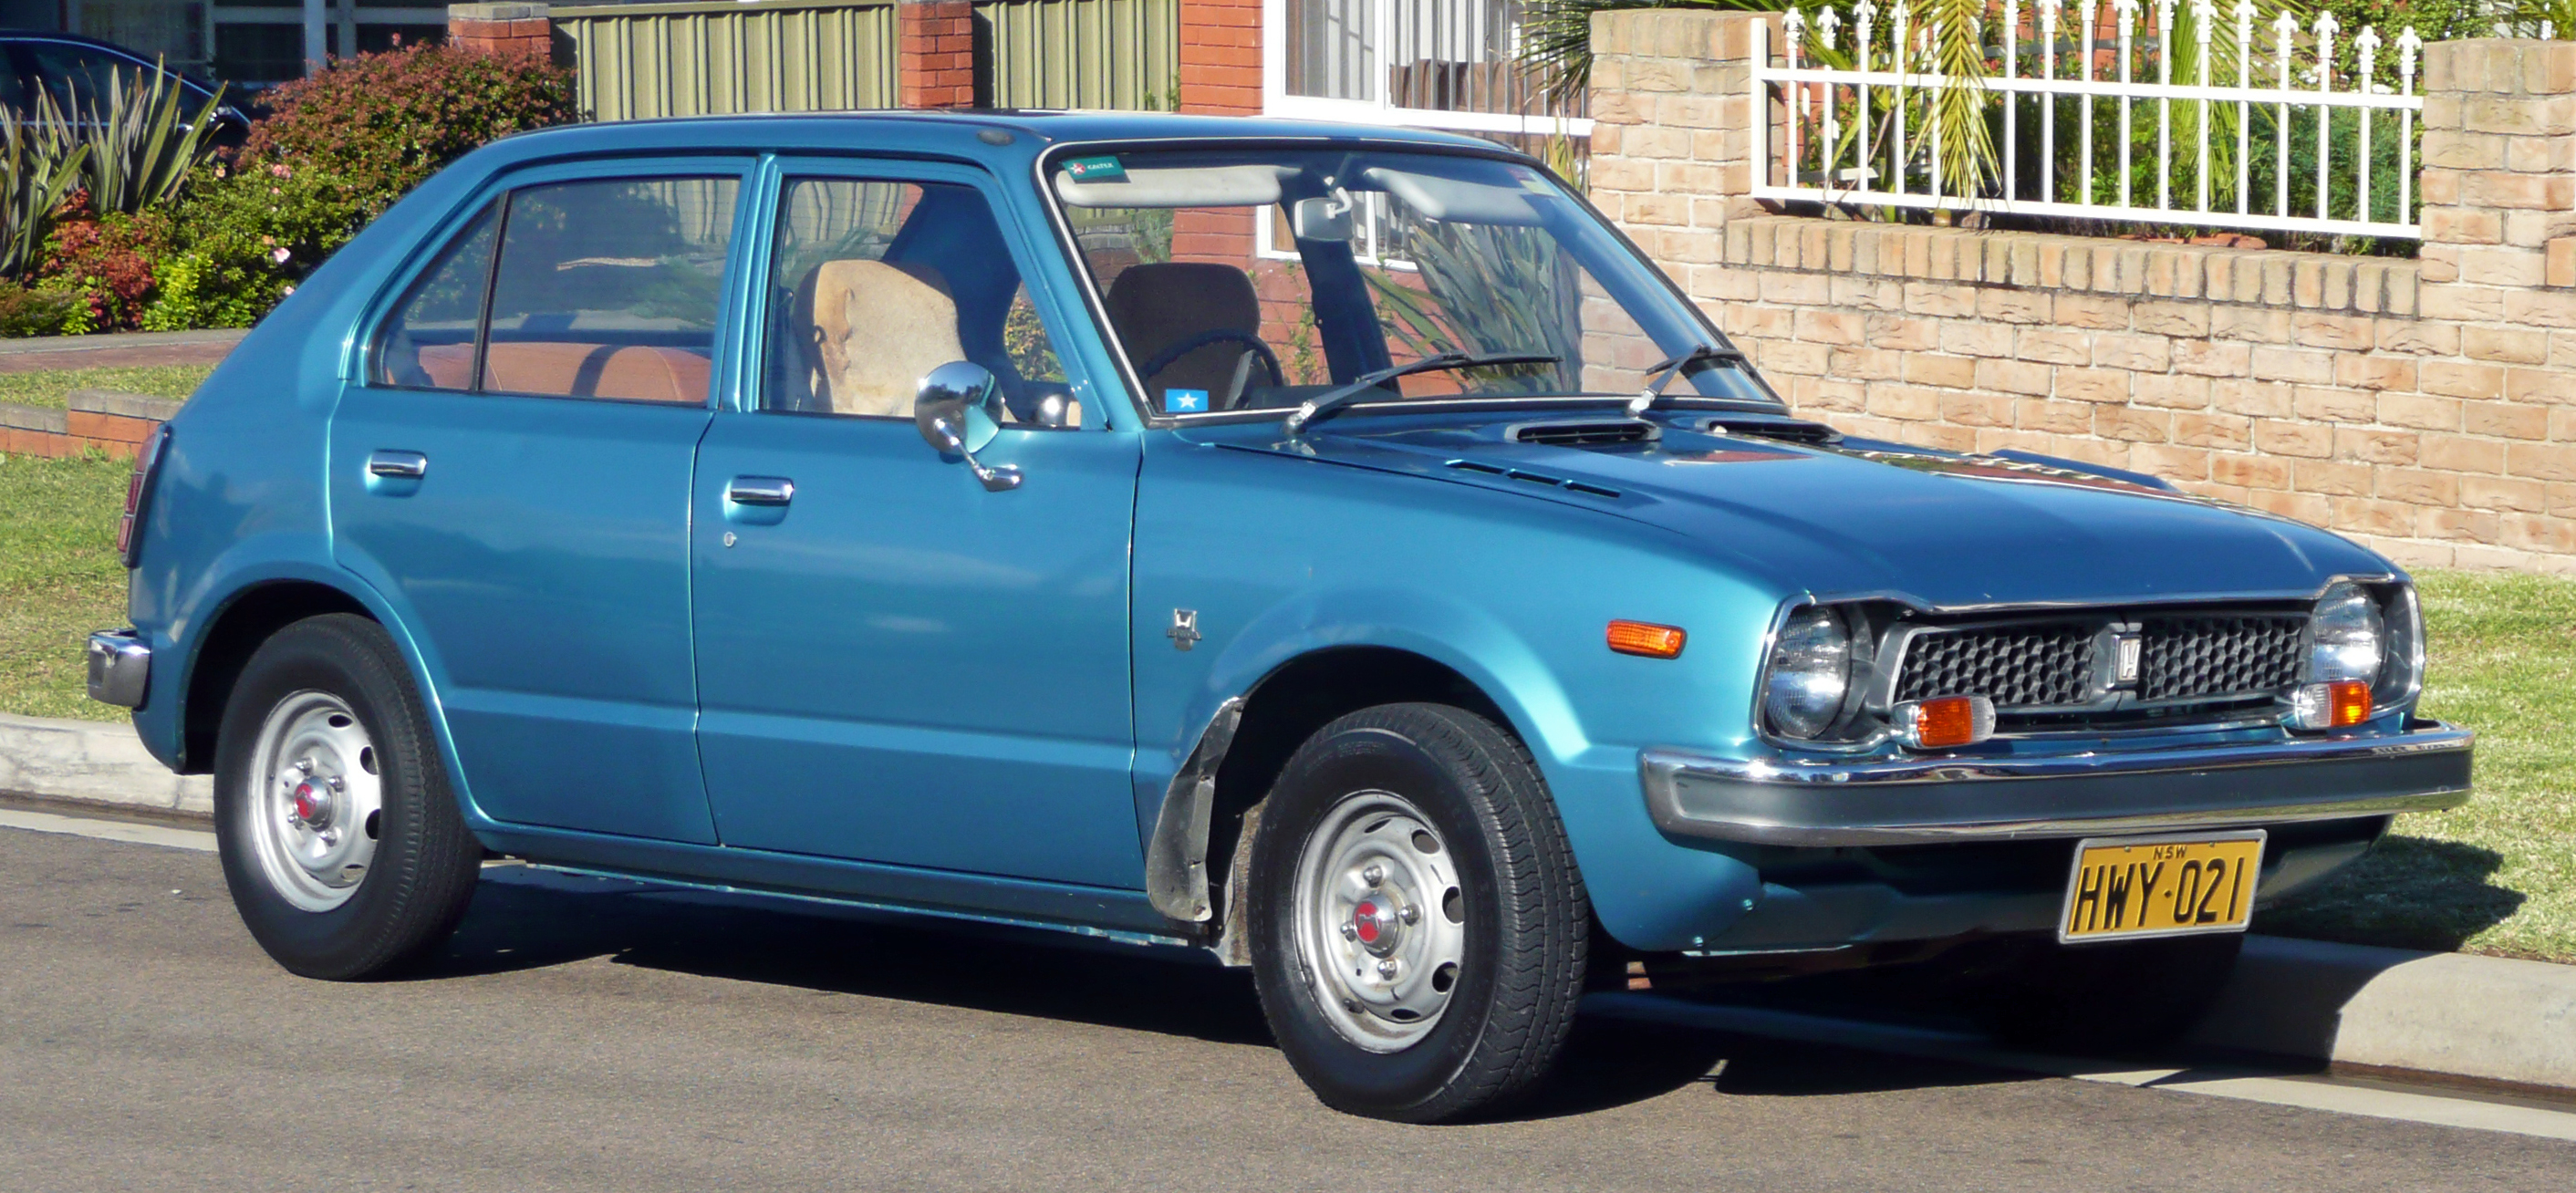 File:1973-1978 Honda Civic 5-door hatchback 01.jpg - Wikimedia Commons